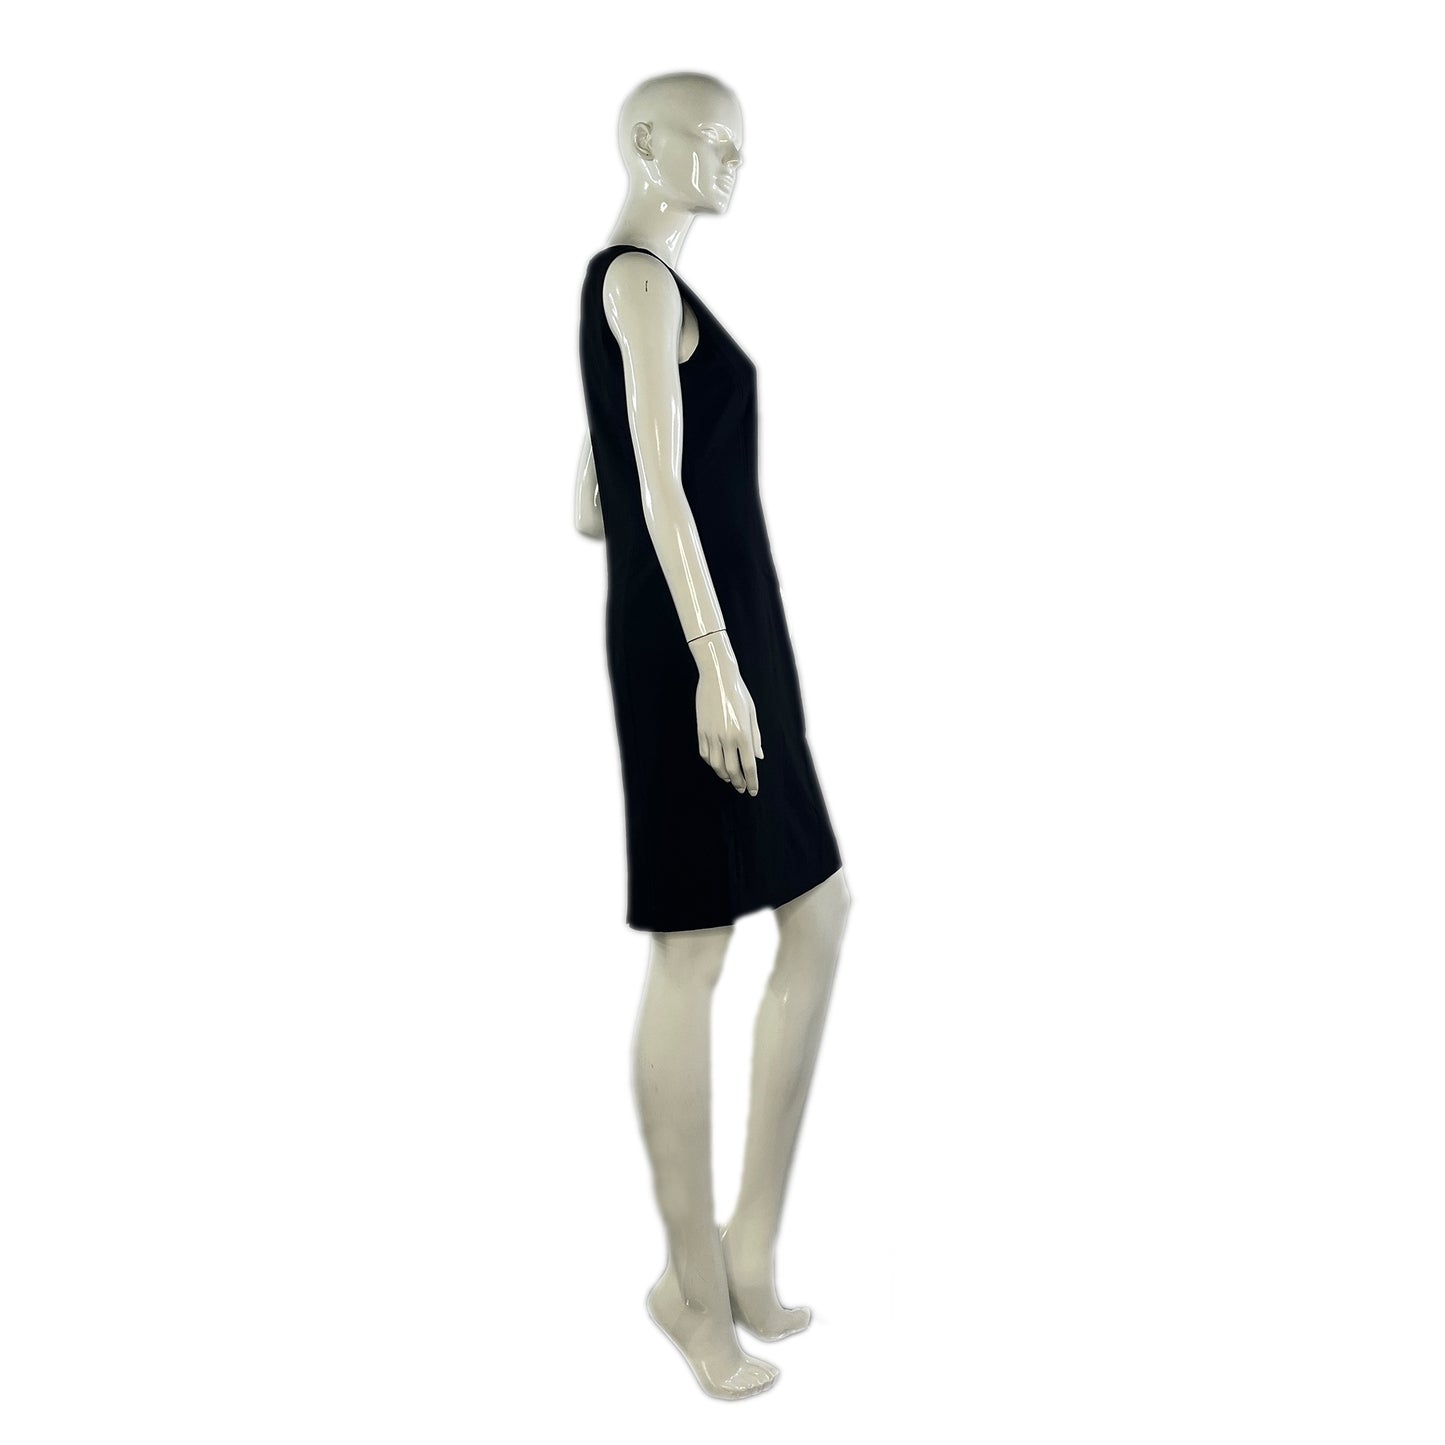 Calvin Klein Dress Sleeveless Above-Knee Black Size 4 SKU 000079-5